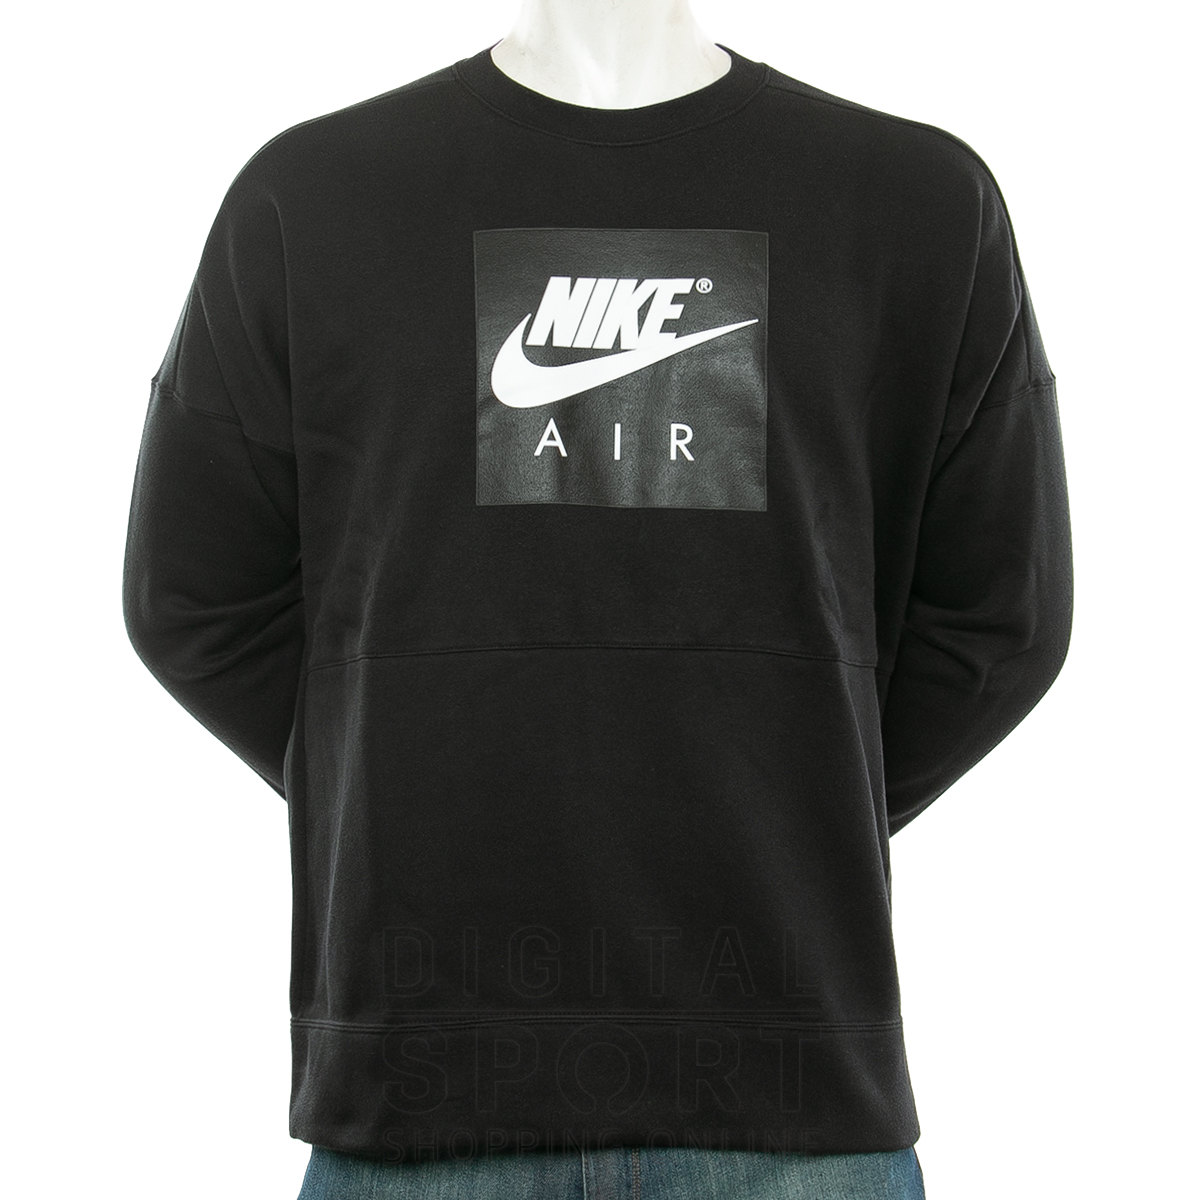 Camiseta Nike Air Deals, GET 60% OFF, sokhanvari.com